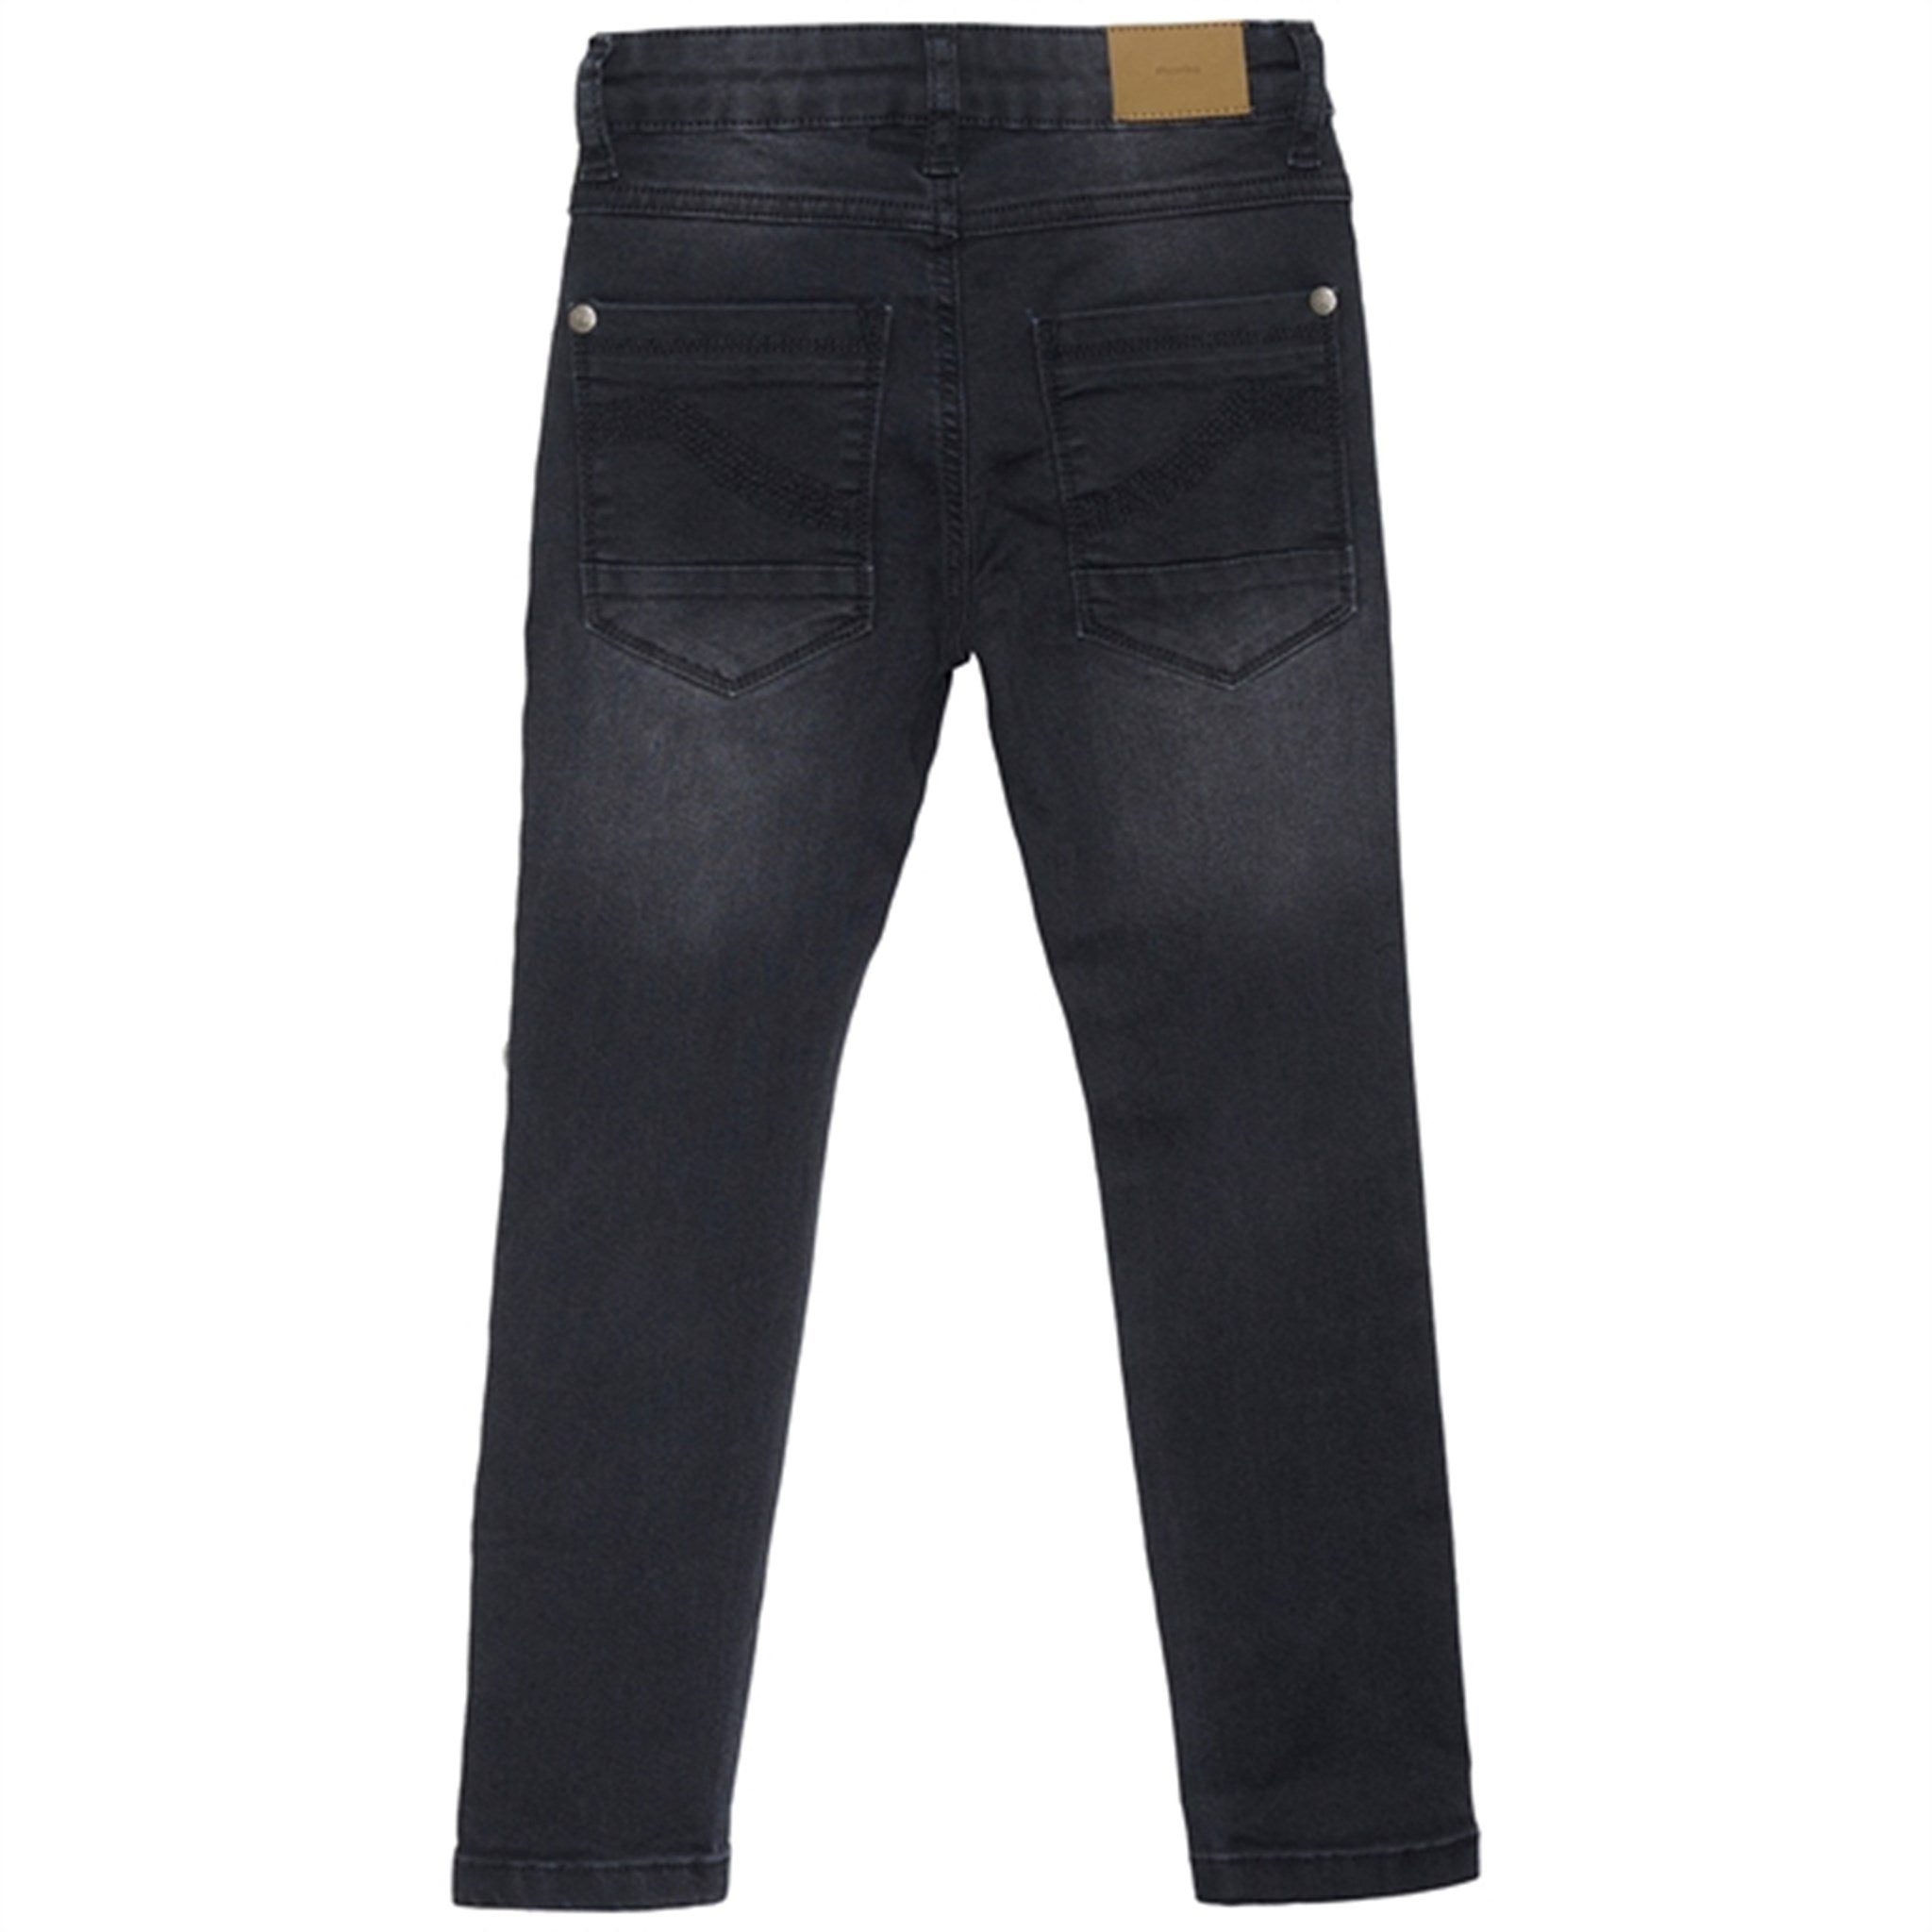 Minymo Grey Black Jeans Stretch Slim Fit NOOS 3